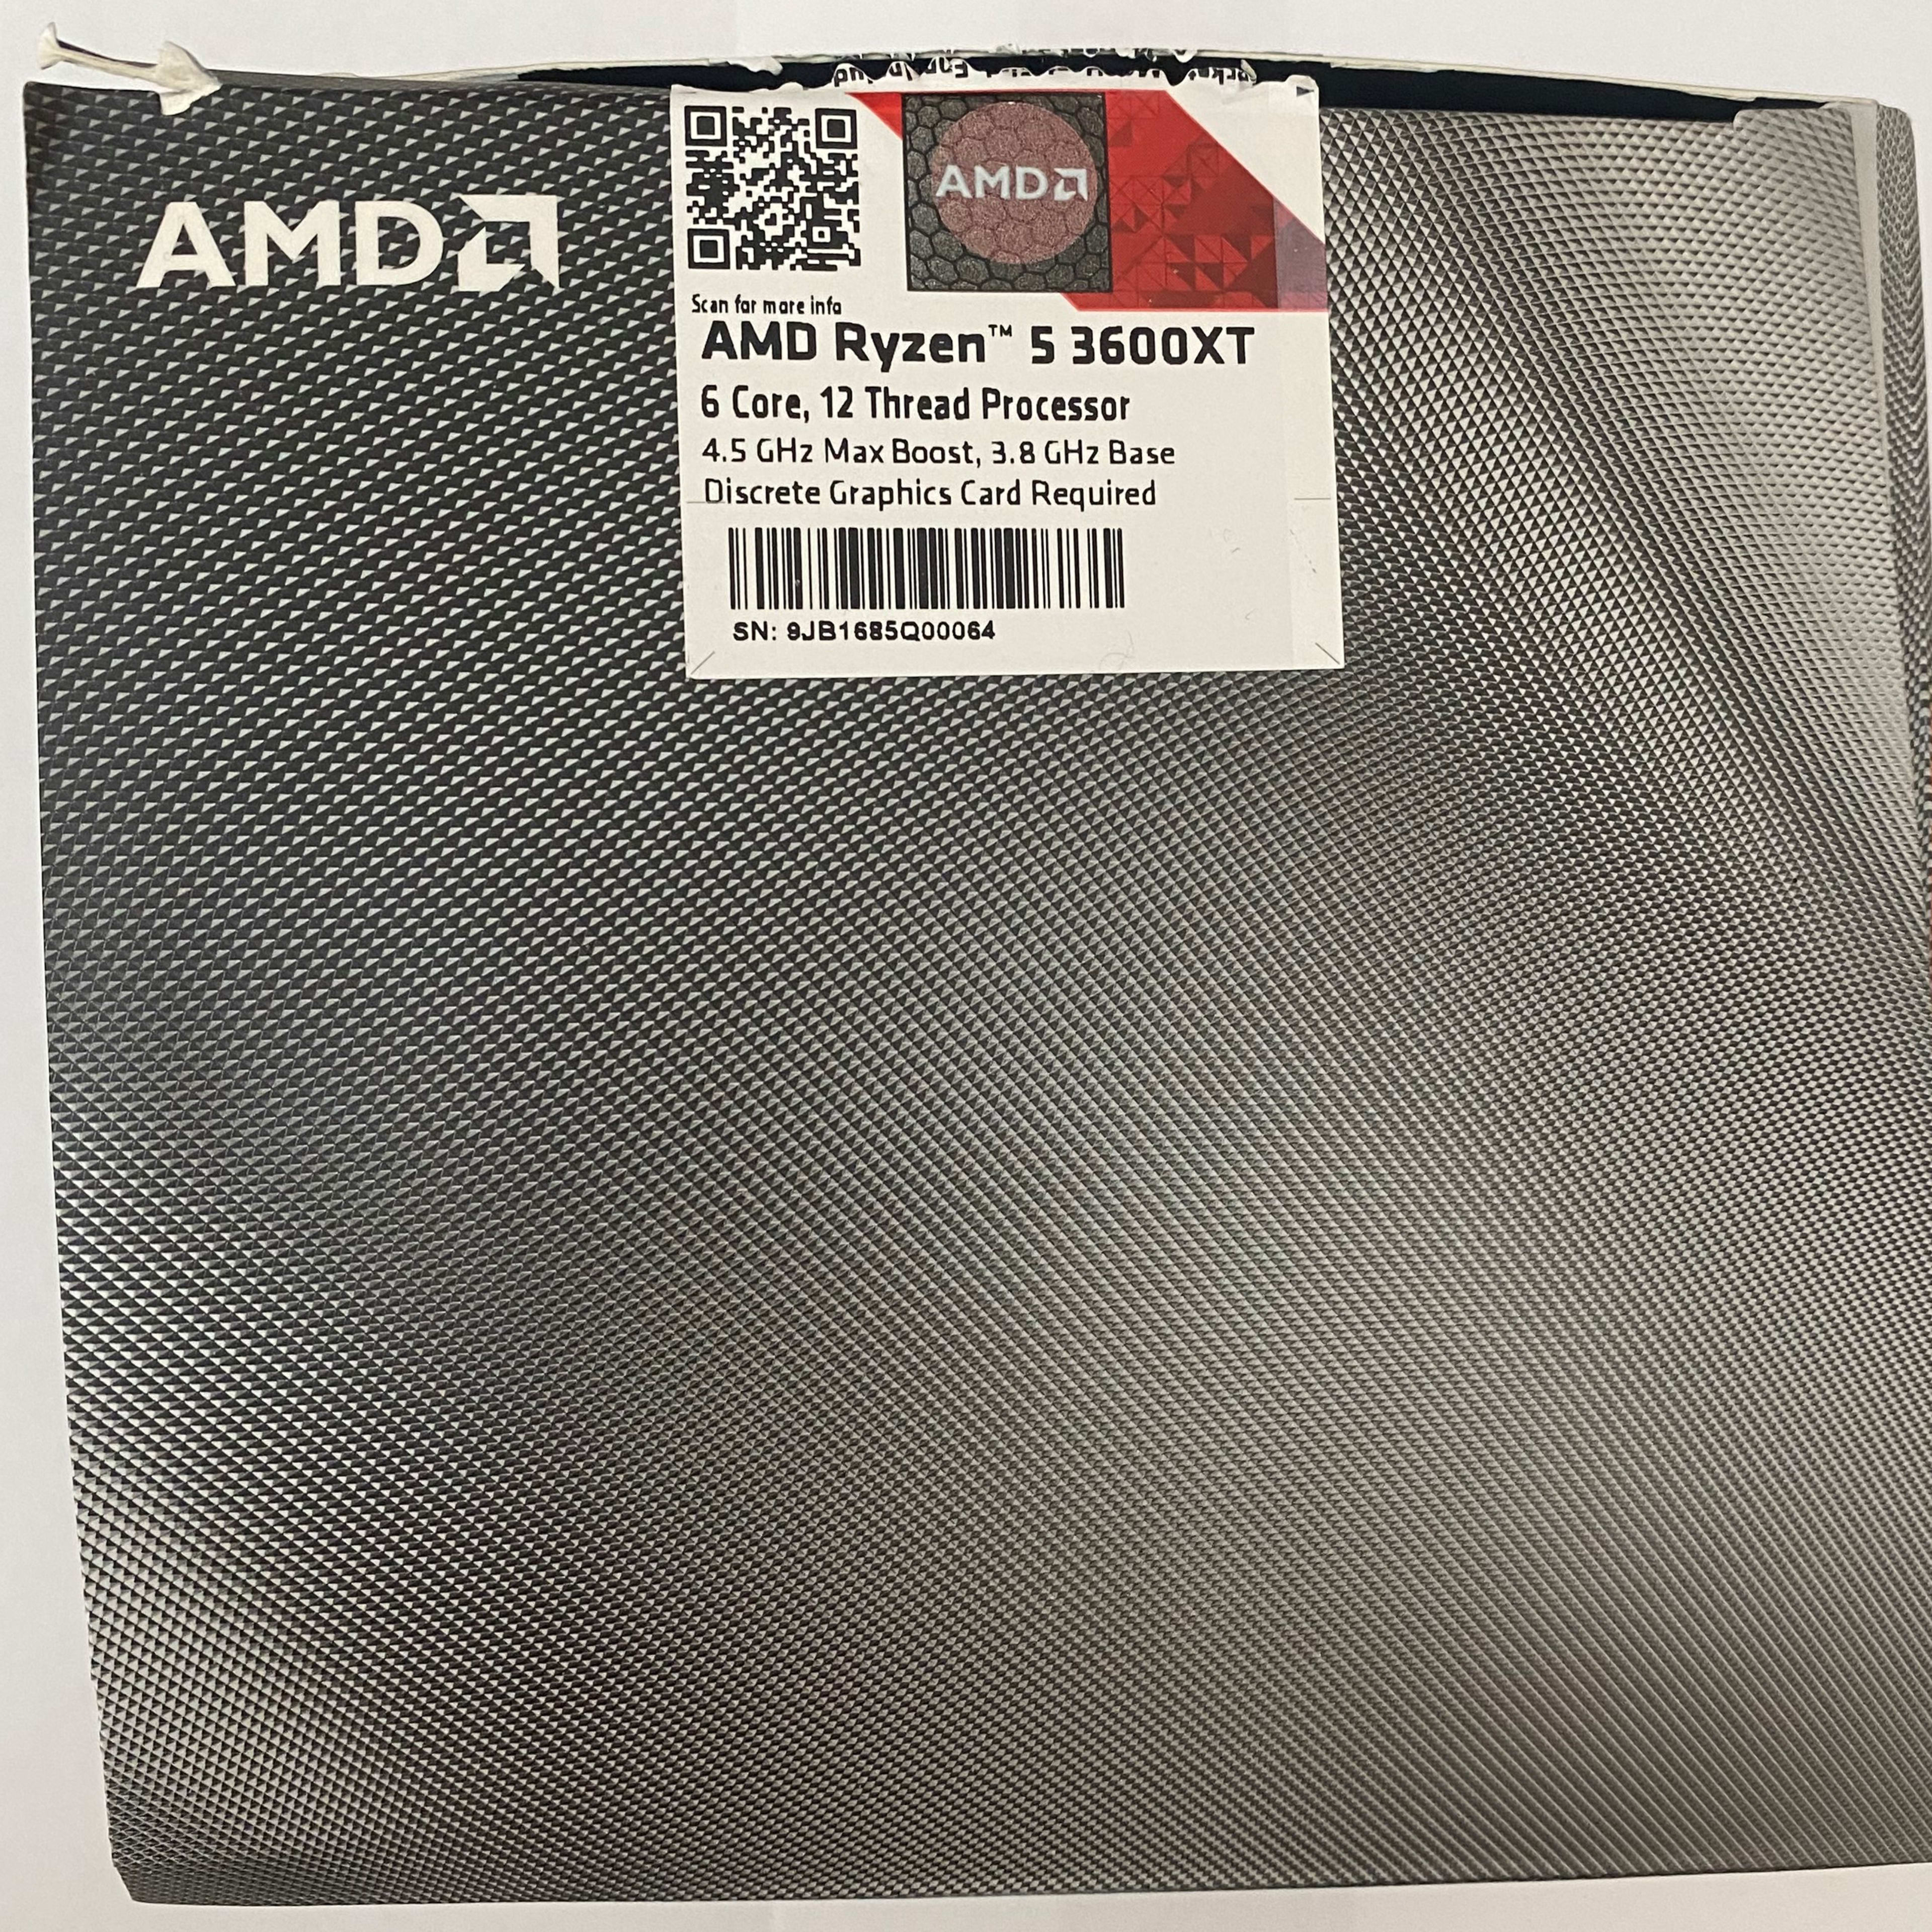 AMD Ryzen 5 3600XT 3.8 GHz 6-Core Processor and AMD Cooler in box.